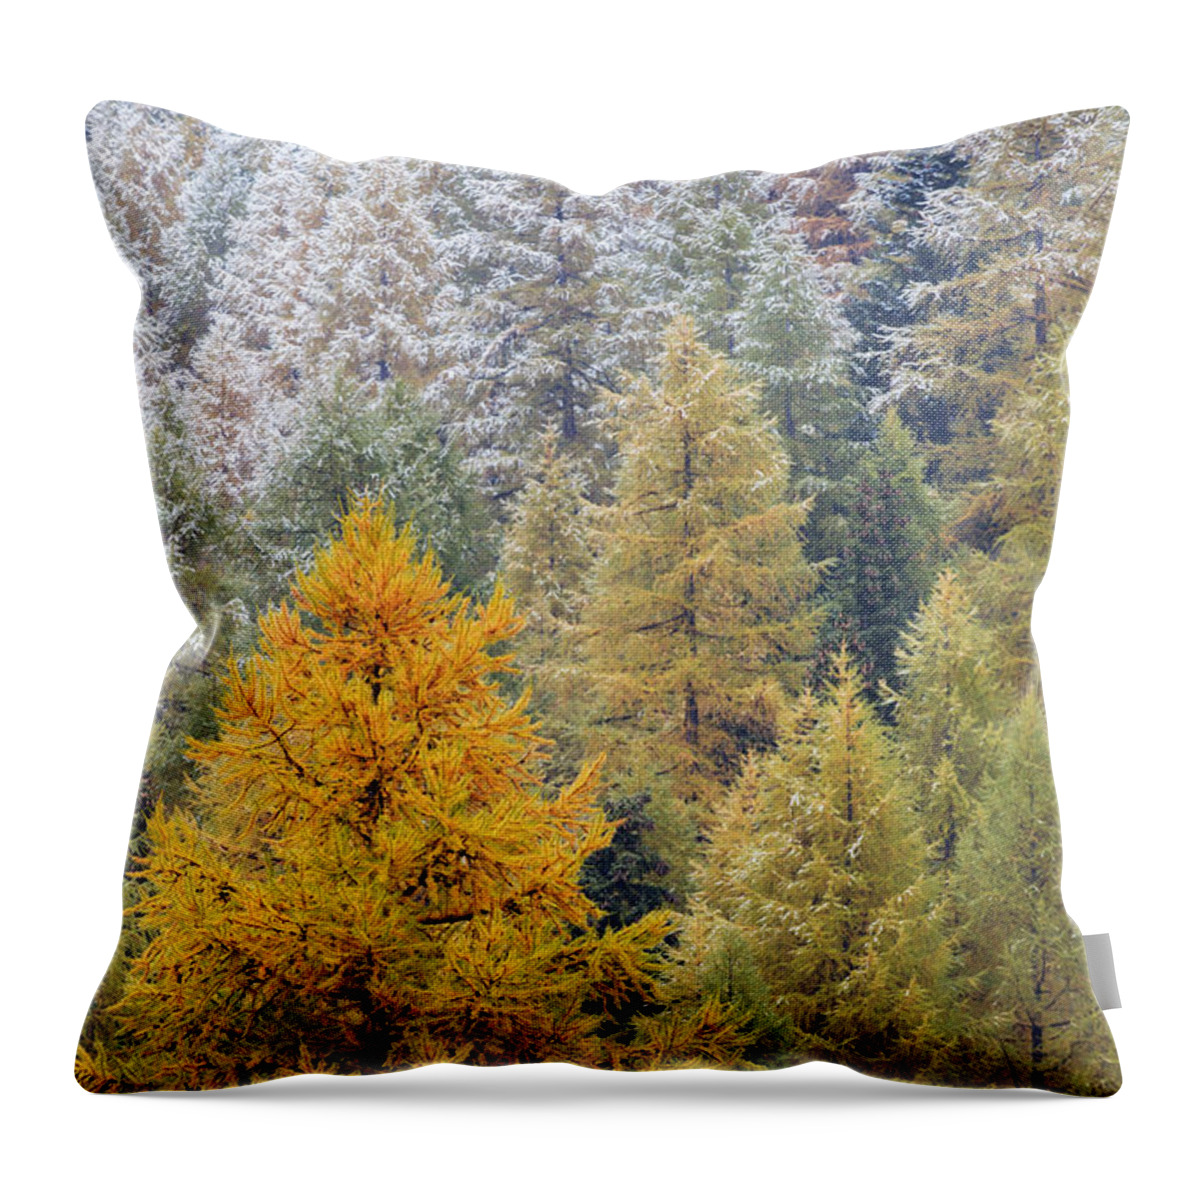 Heike Odermatt Throw Pillow featuring the photograph Autumn Larch Forest, Alps Switzerland by Heike Odermatt